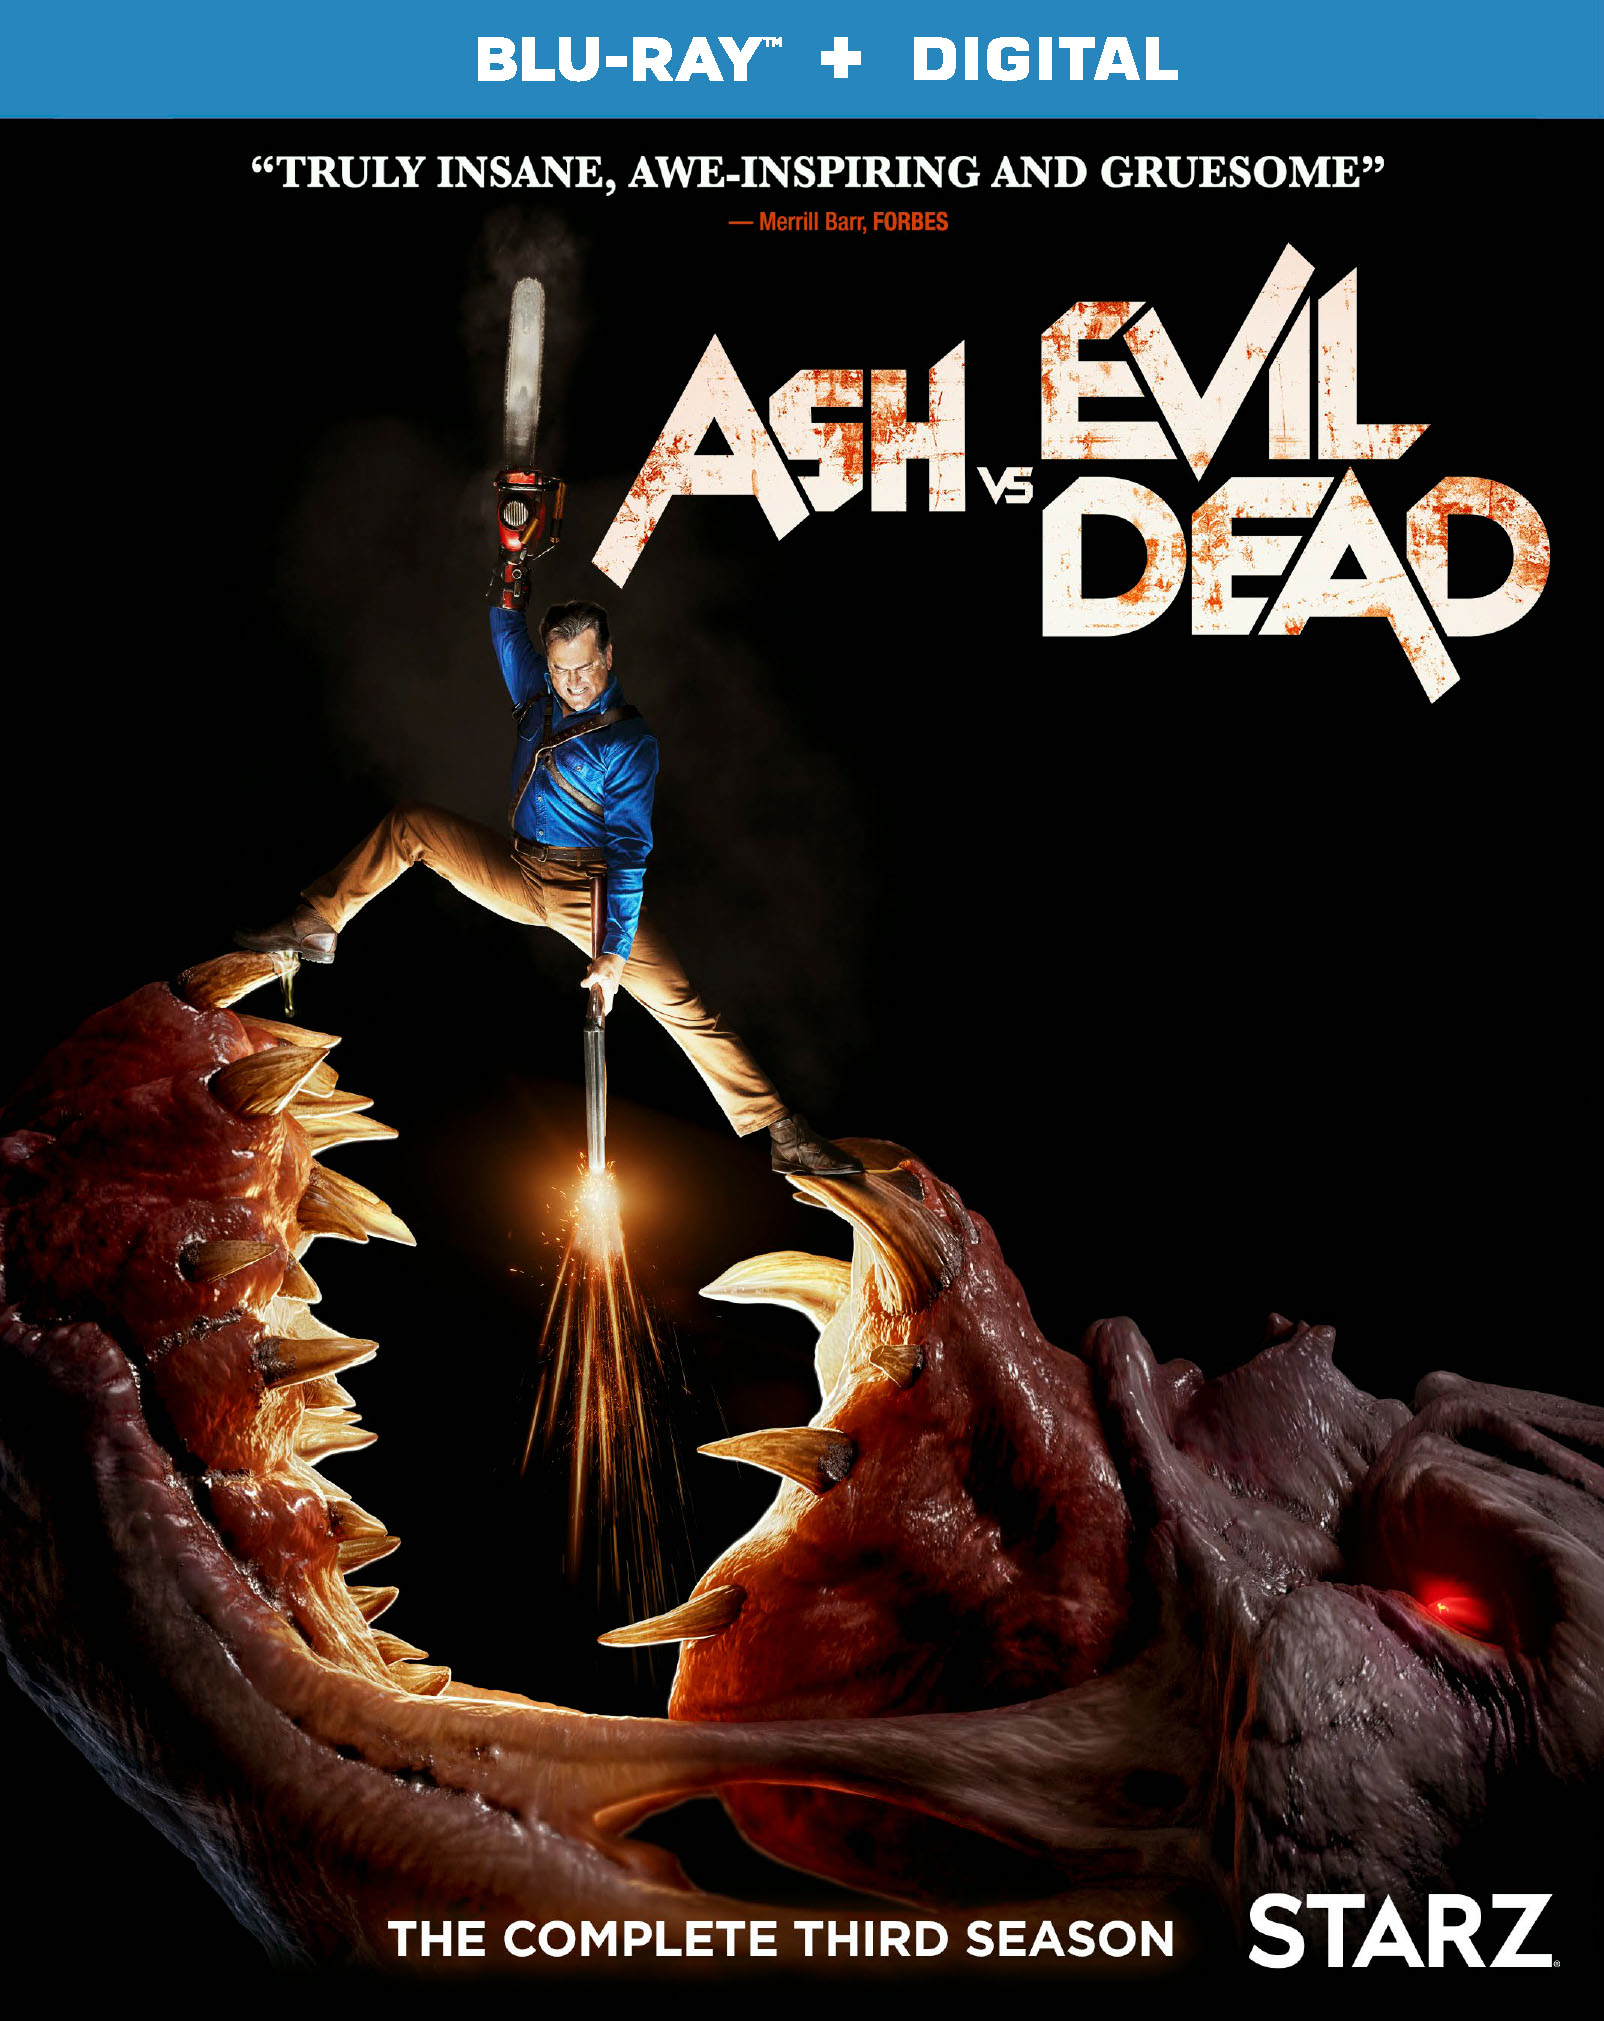 evil dead 3 poster